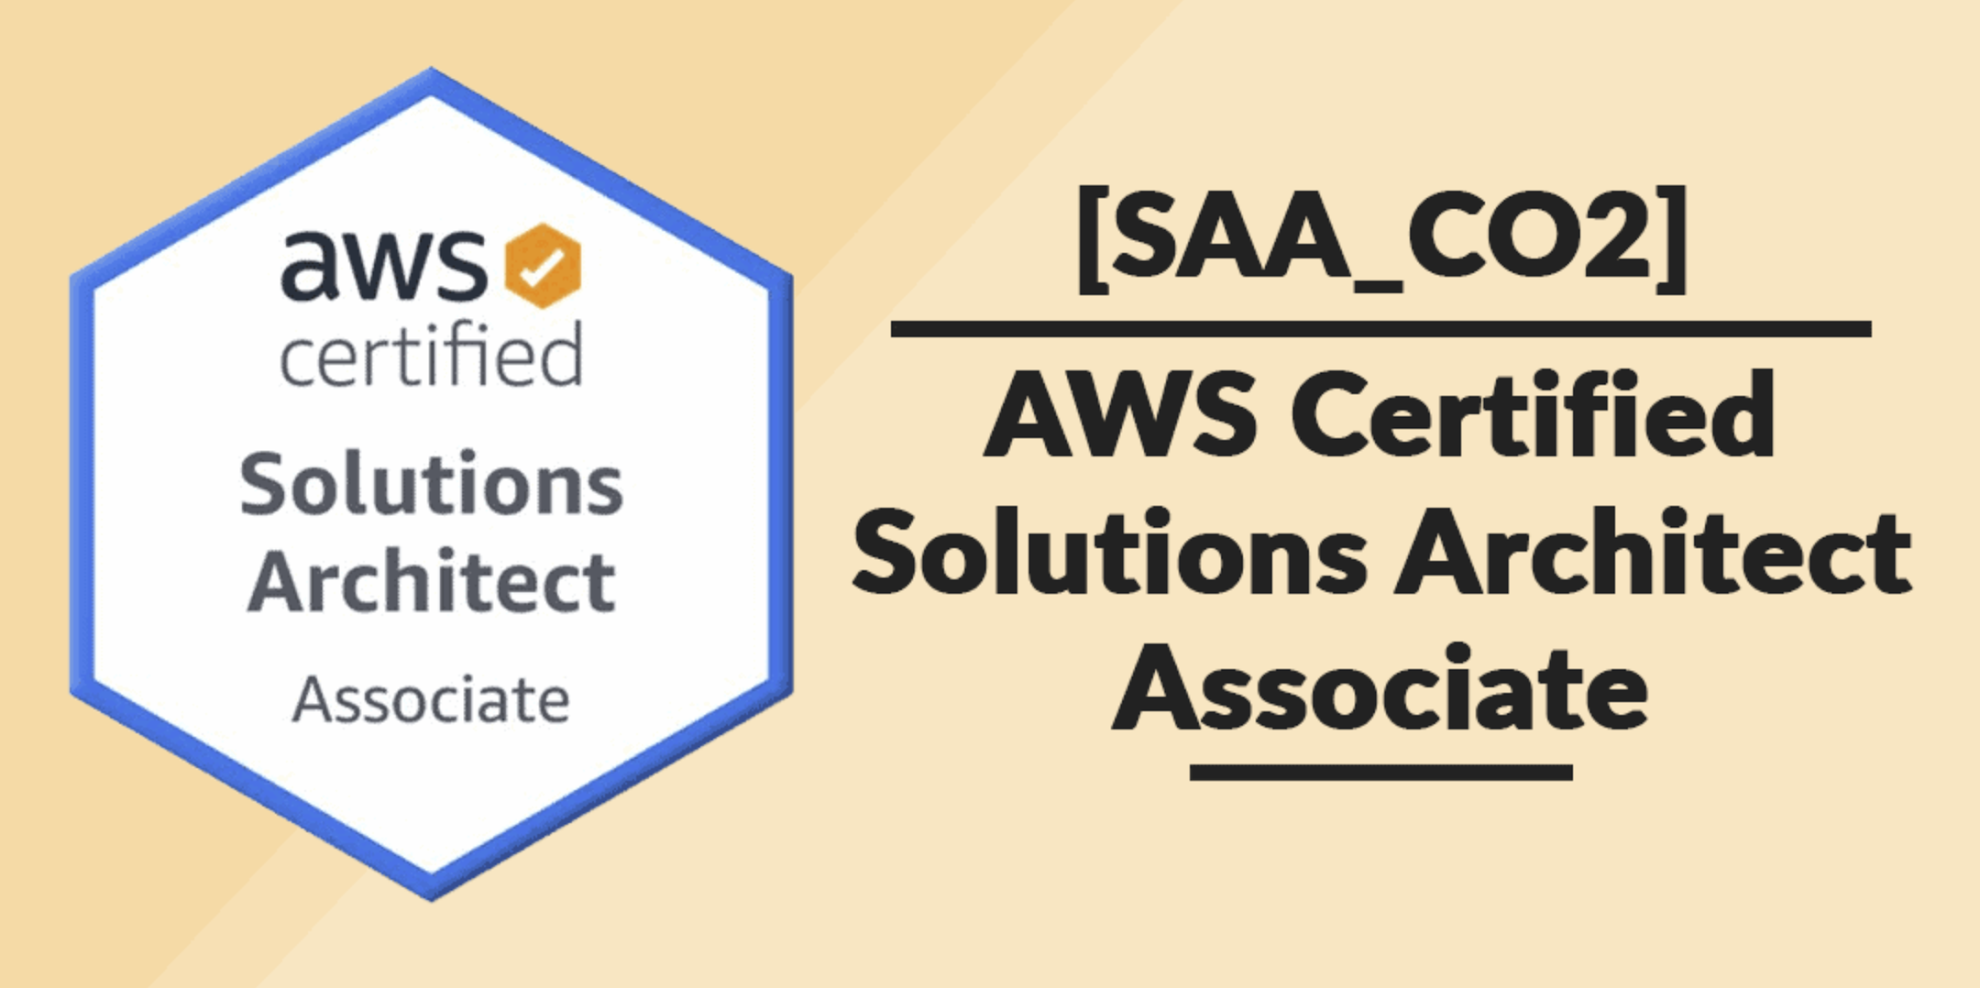 SAA-C02 Certification Questions